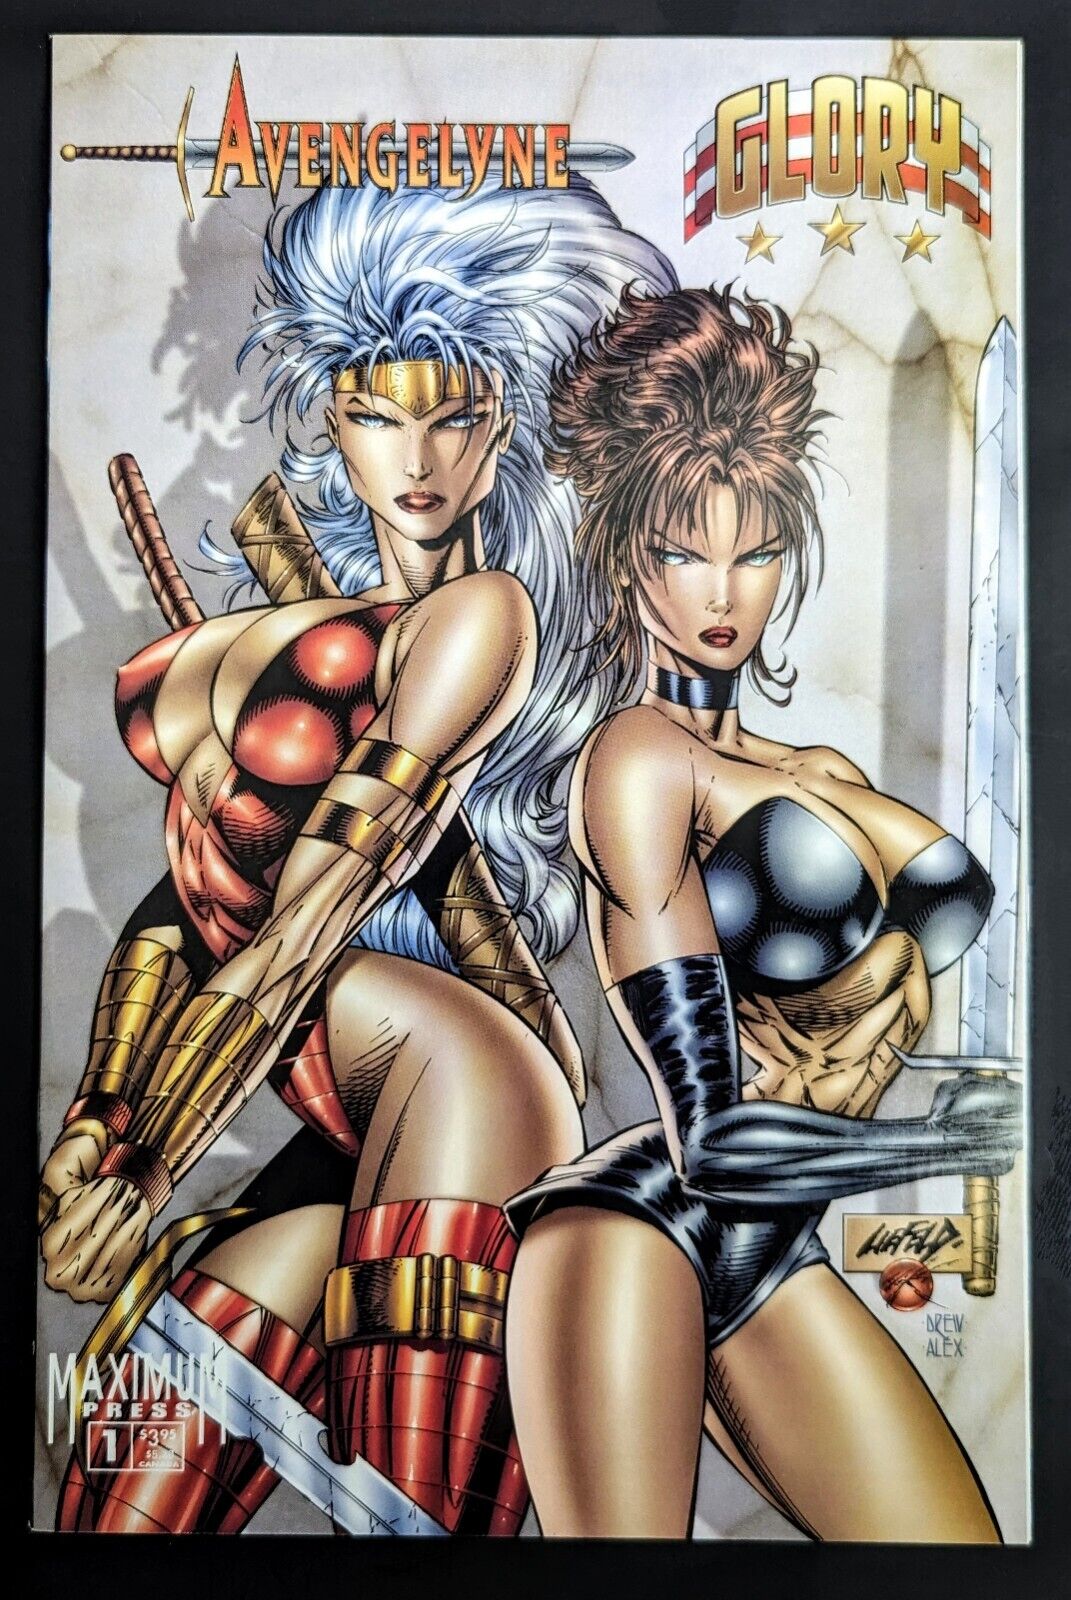 1995 Avengelyne Glory #1 Direct Edition Cover Maximum Press Comics